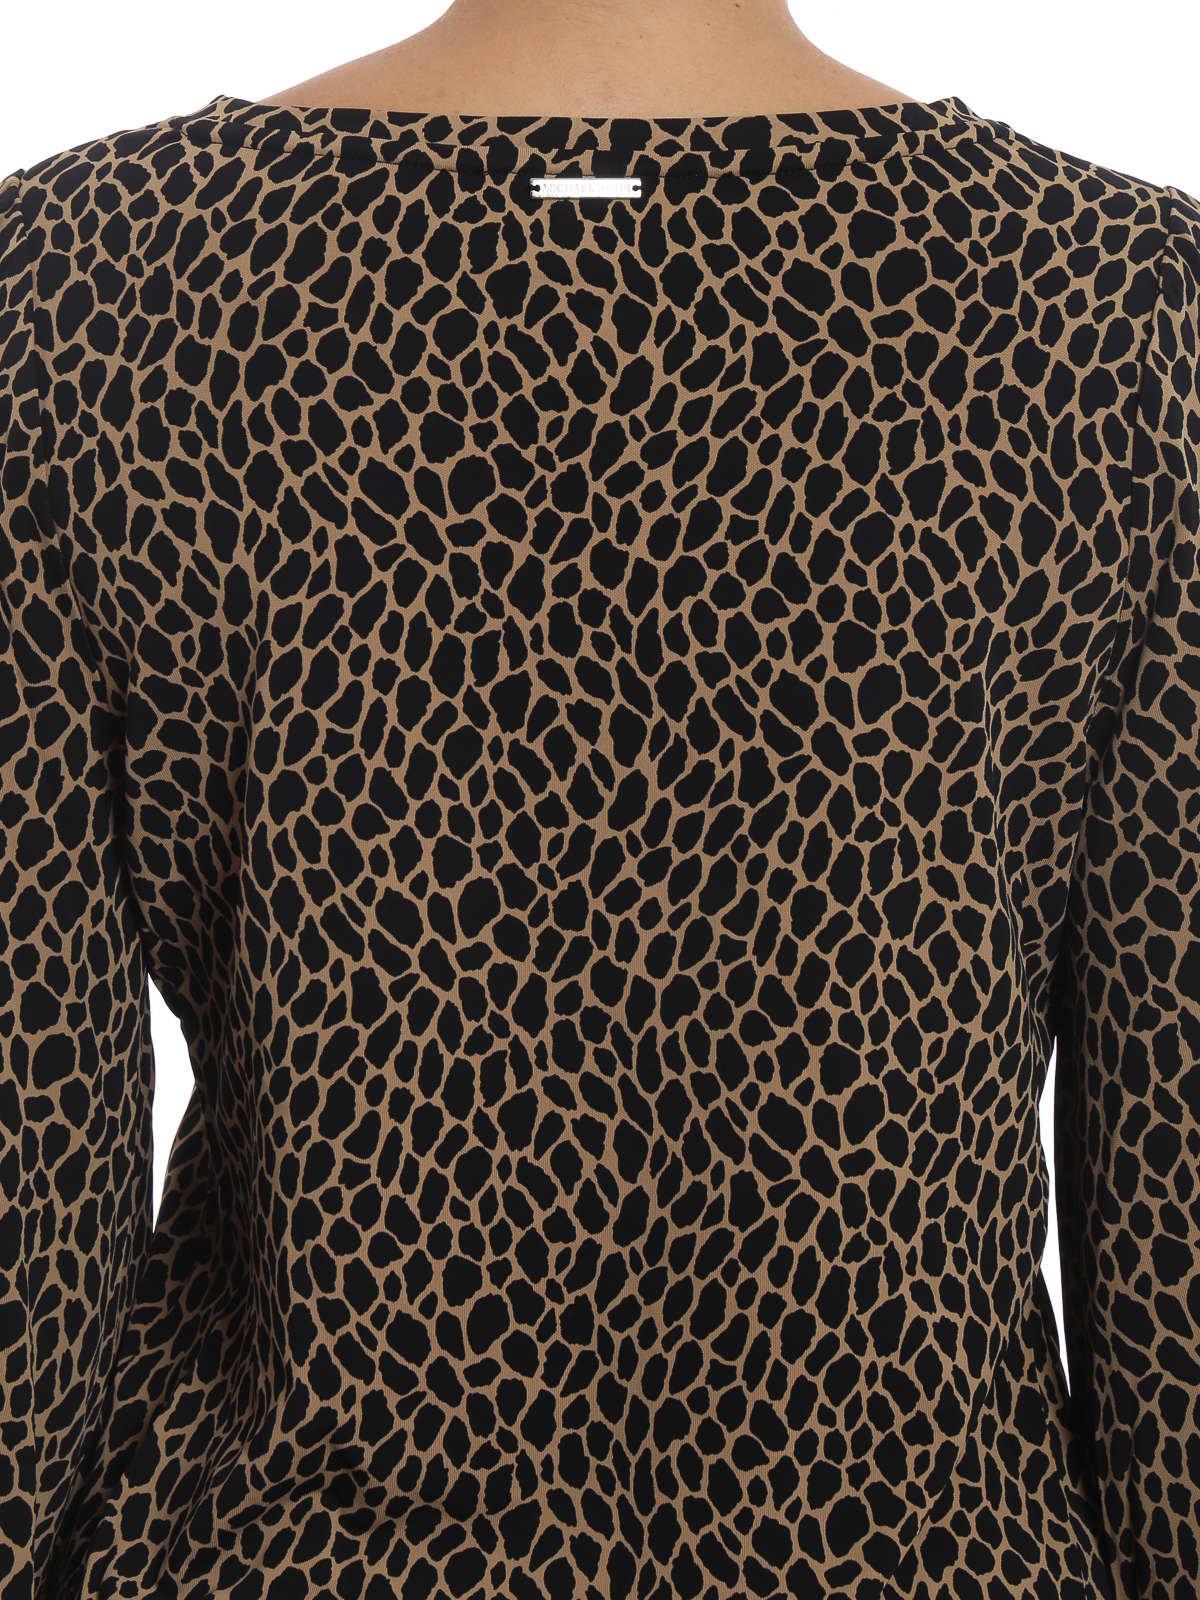 Animal print matte jersey blouse 